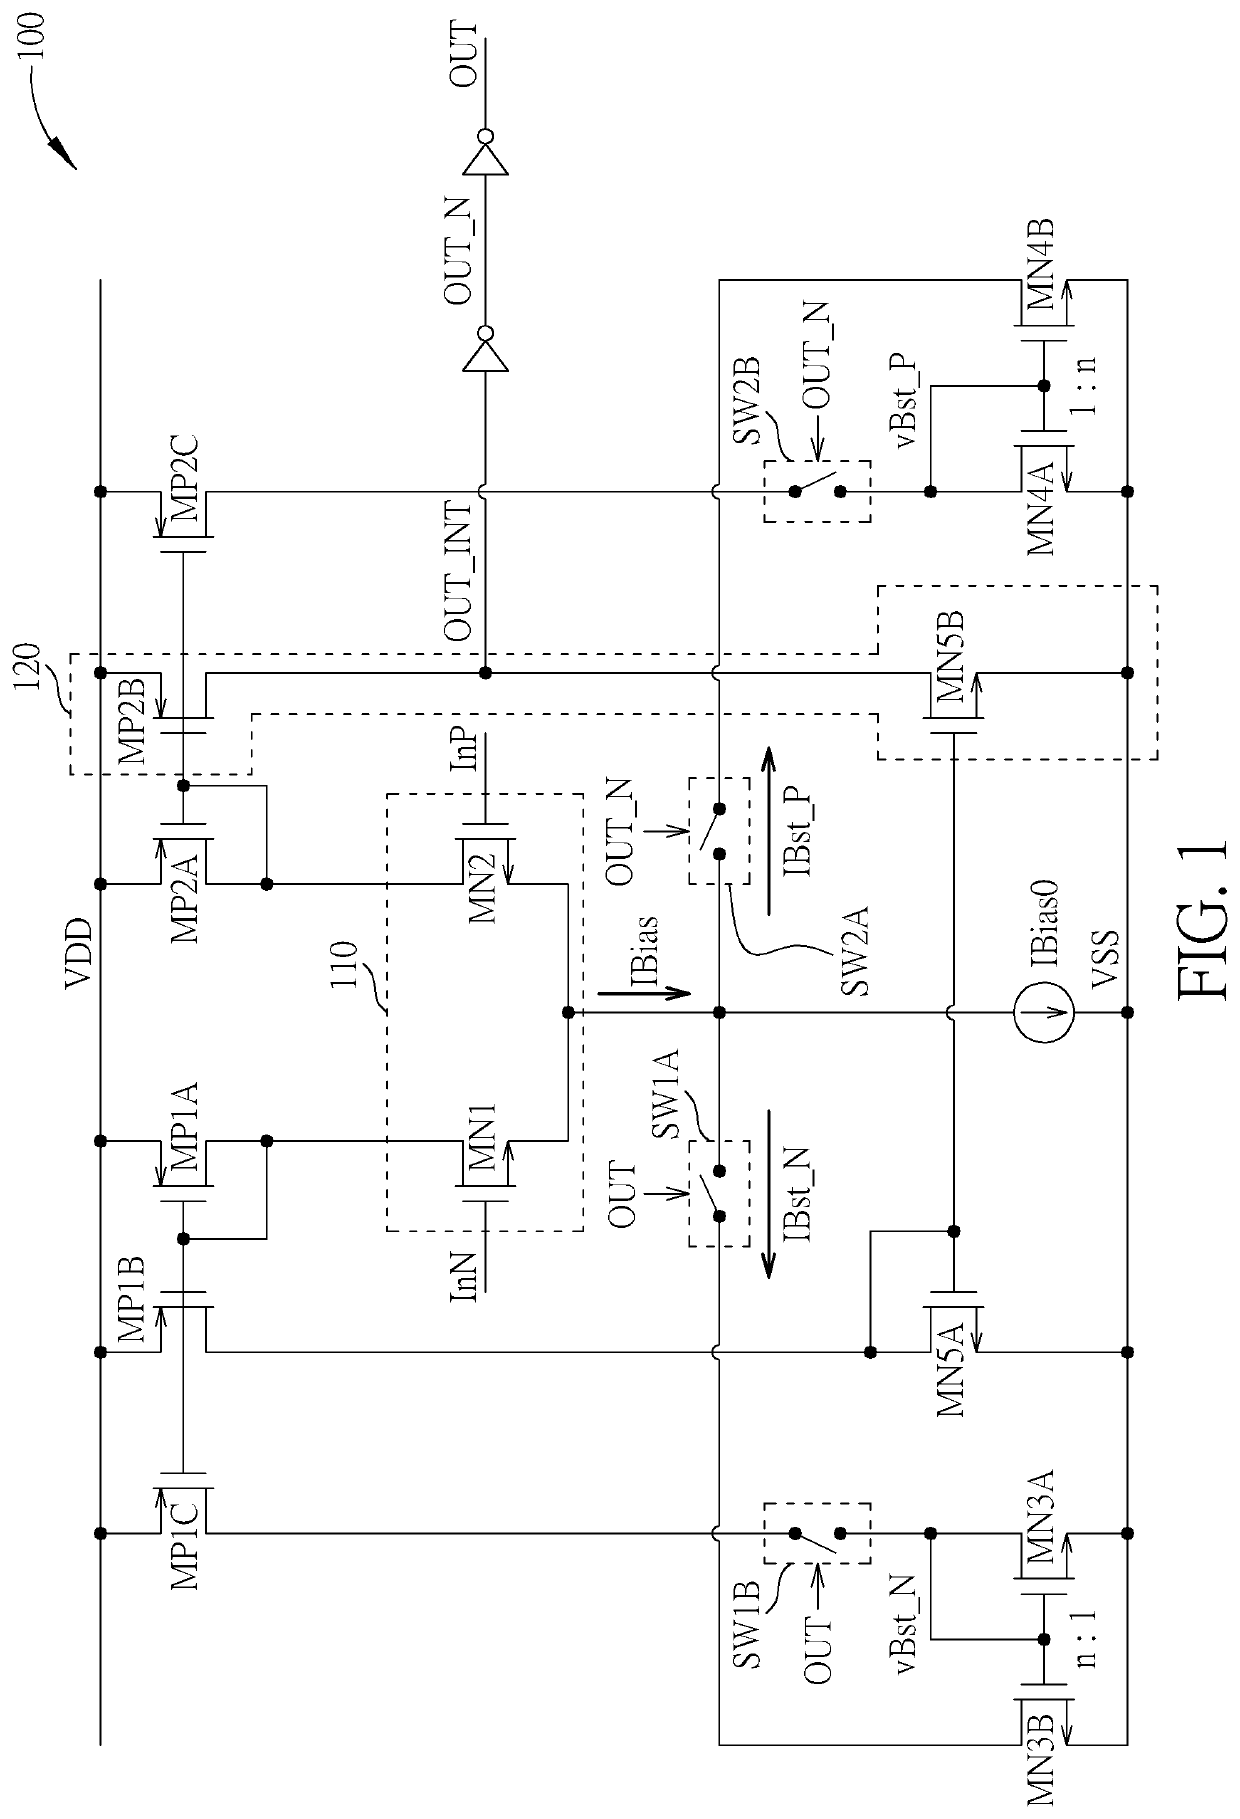 Comparator circuit